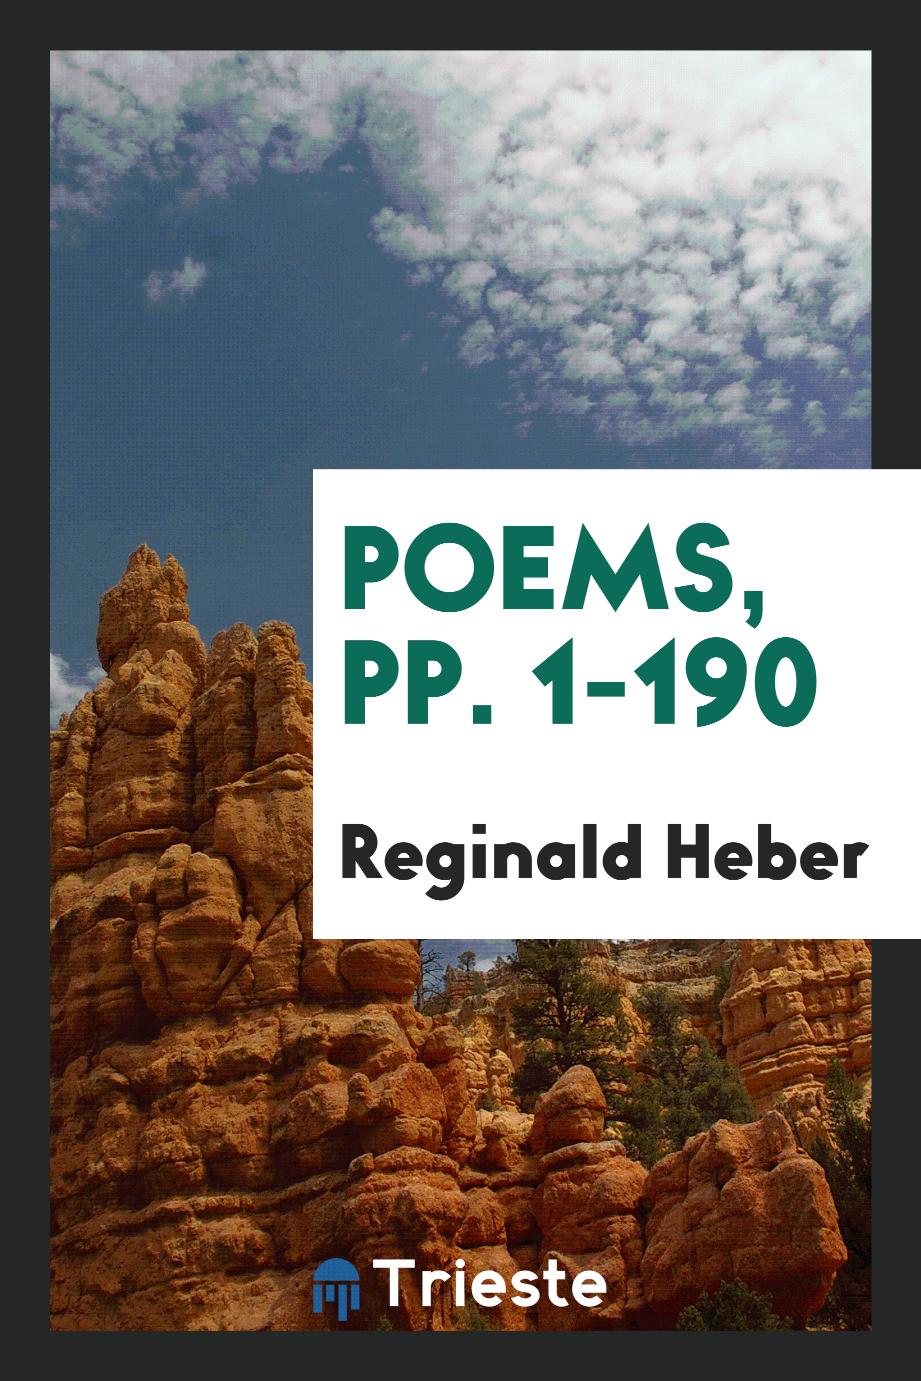 Poems, pp. 1-190